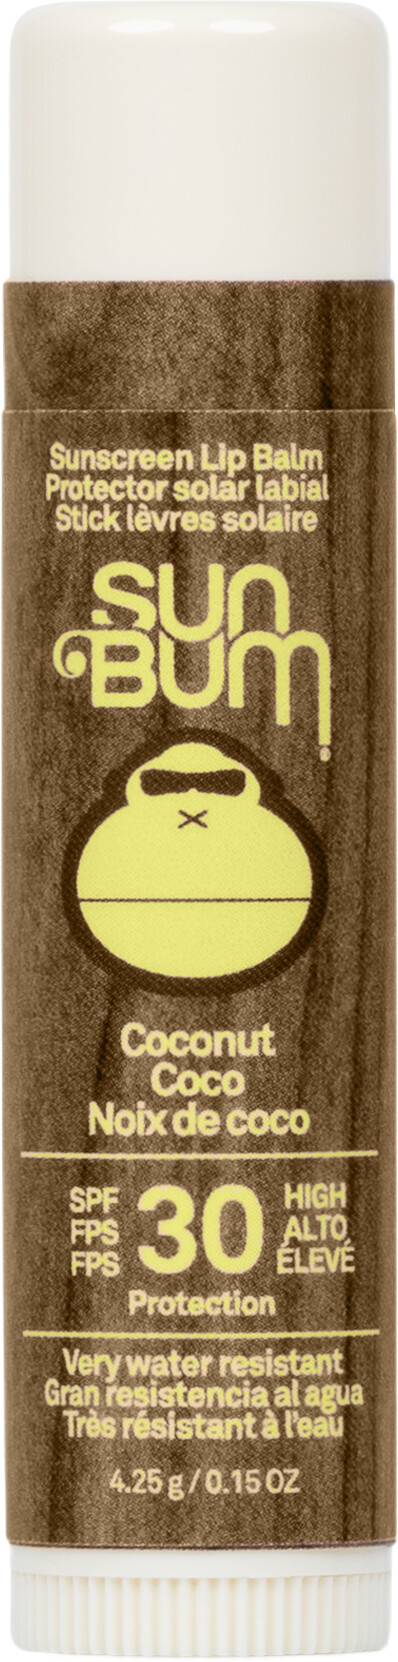 Sun Bum Original Lip Balm SPF30 4.25g Coconut